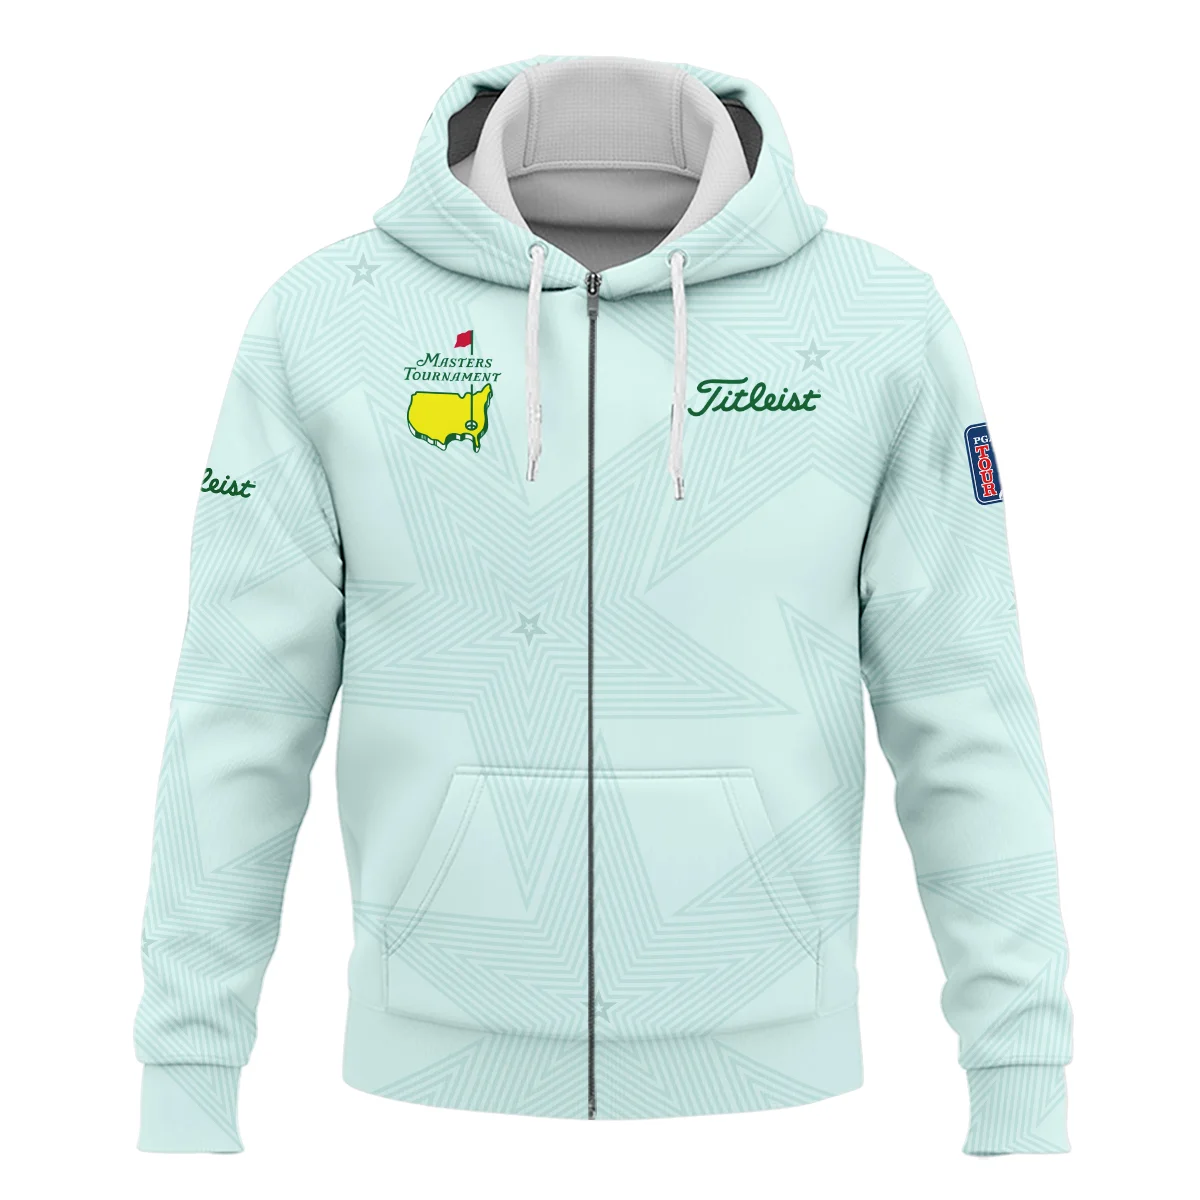 Golf Love Star Light Green Mix Masters Tournament Titlest Zipper Polo Shirt Style Classic